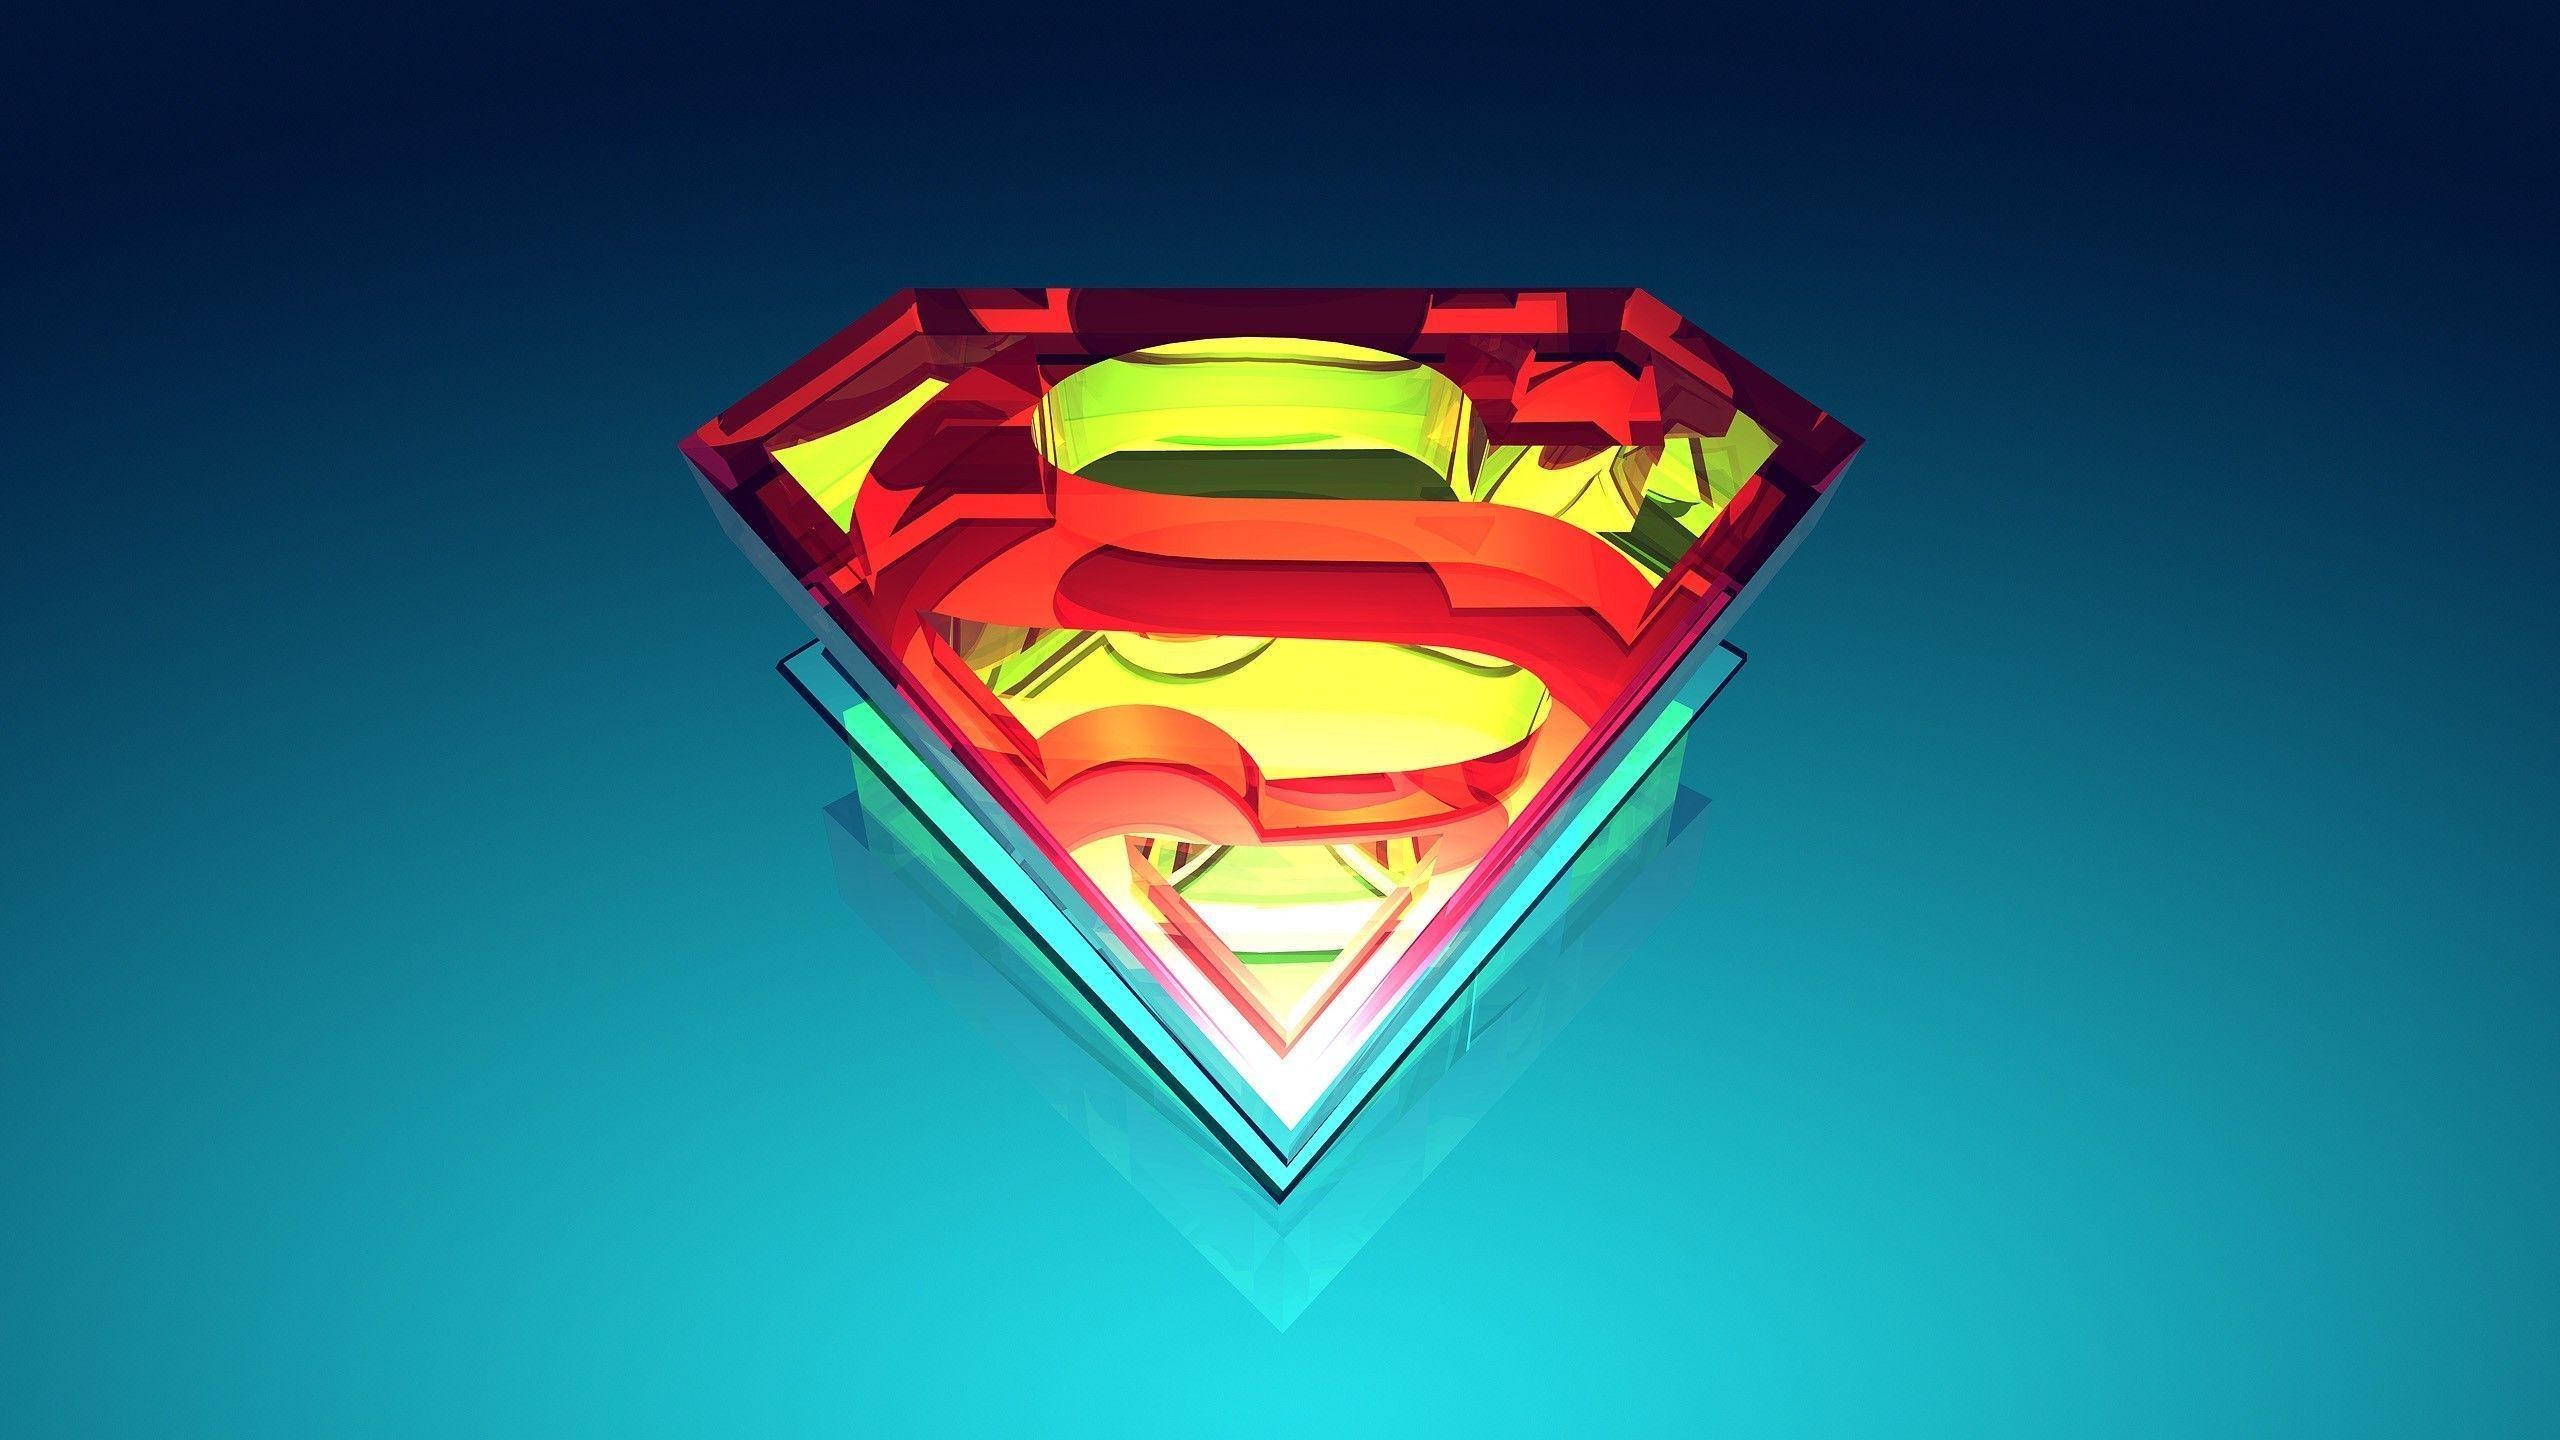 Abstract Superman Logo Wallpaper Desktop Image Download Free Windows Wallpaper Colourful 4k Picture Artwork Lovely 2560x1440. Full HD Wallpaper